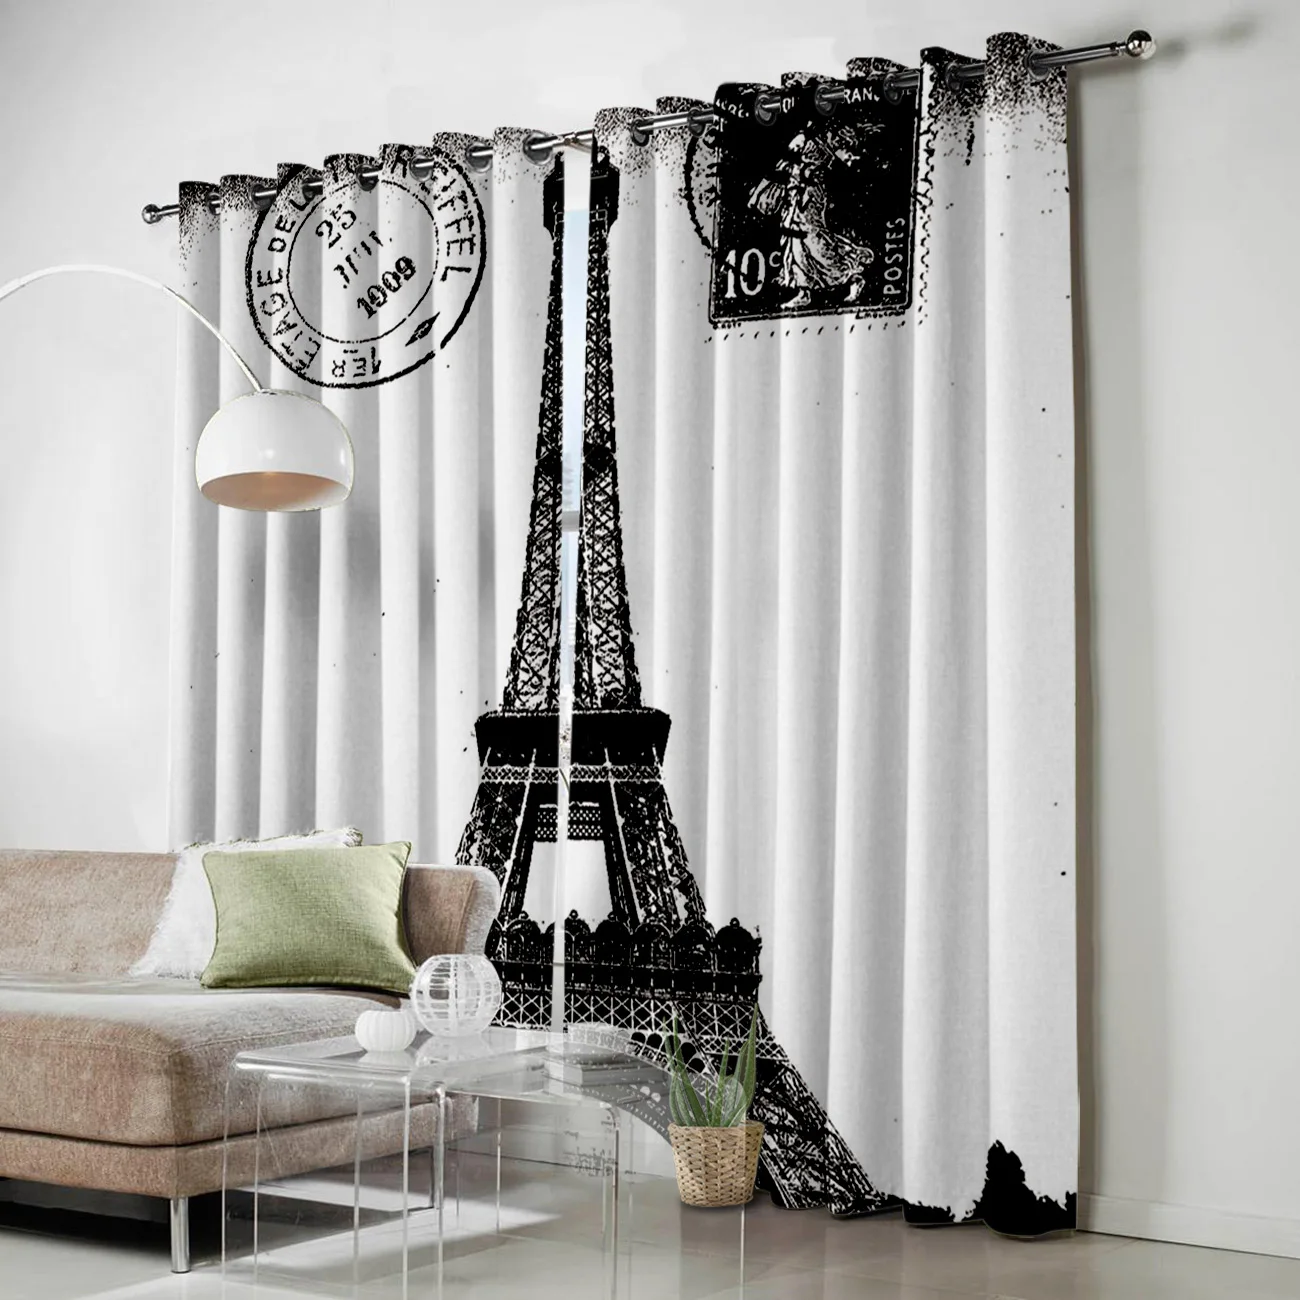 Retro Stamps Paris Tower Black White Window Treatments Curtains Valance Living Room Bedroom Indoor Decor Window Treatment